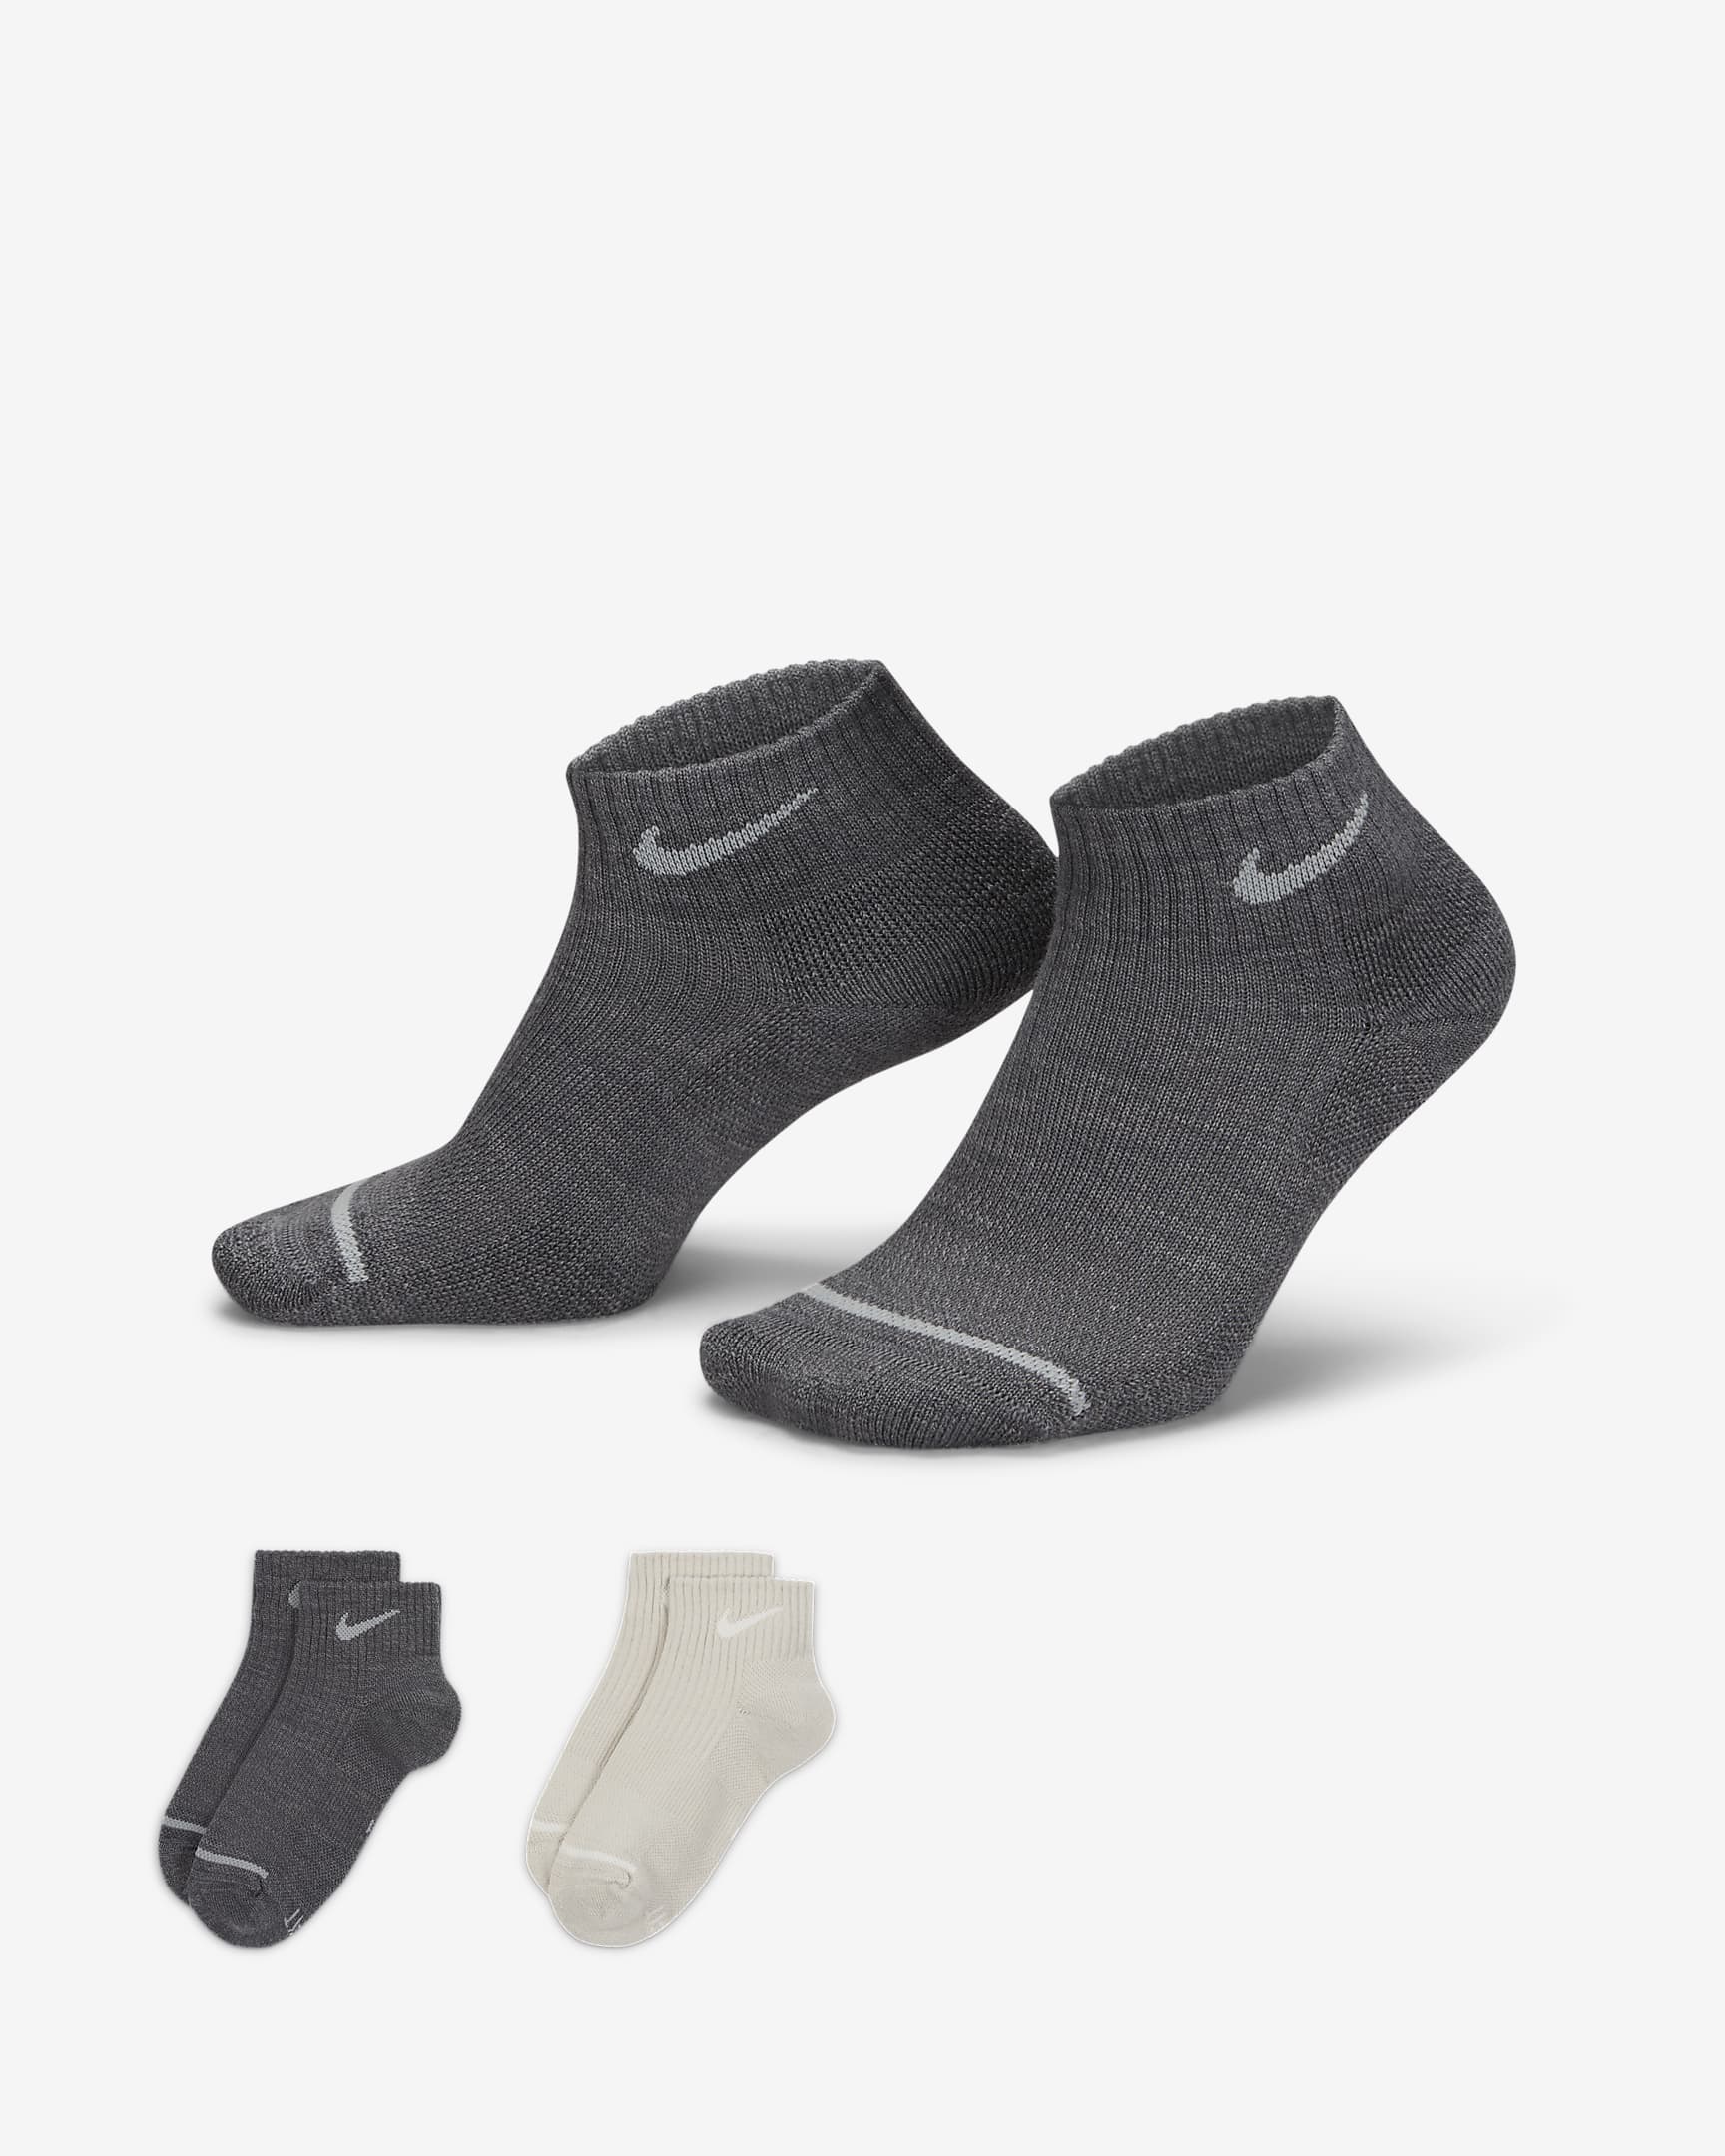 Socquettes rembourrées Nike Everyday Wool (2 paires) - Multicolore